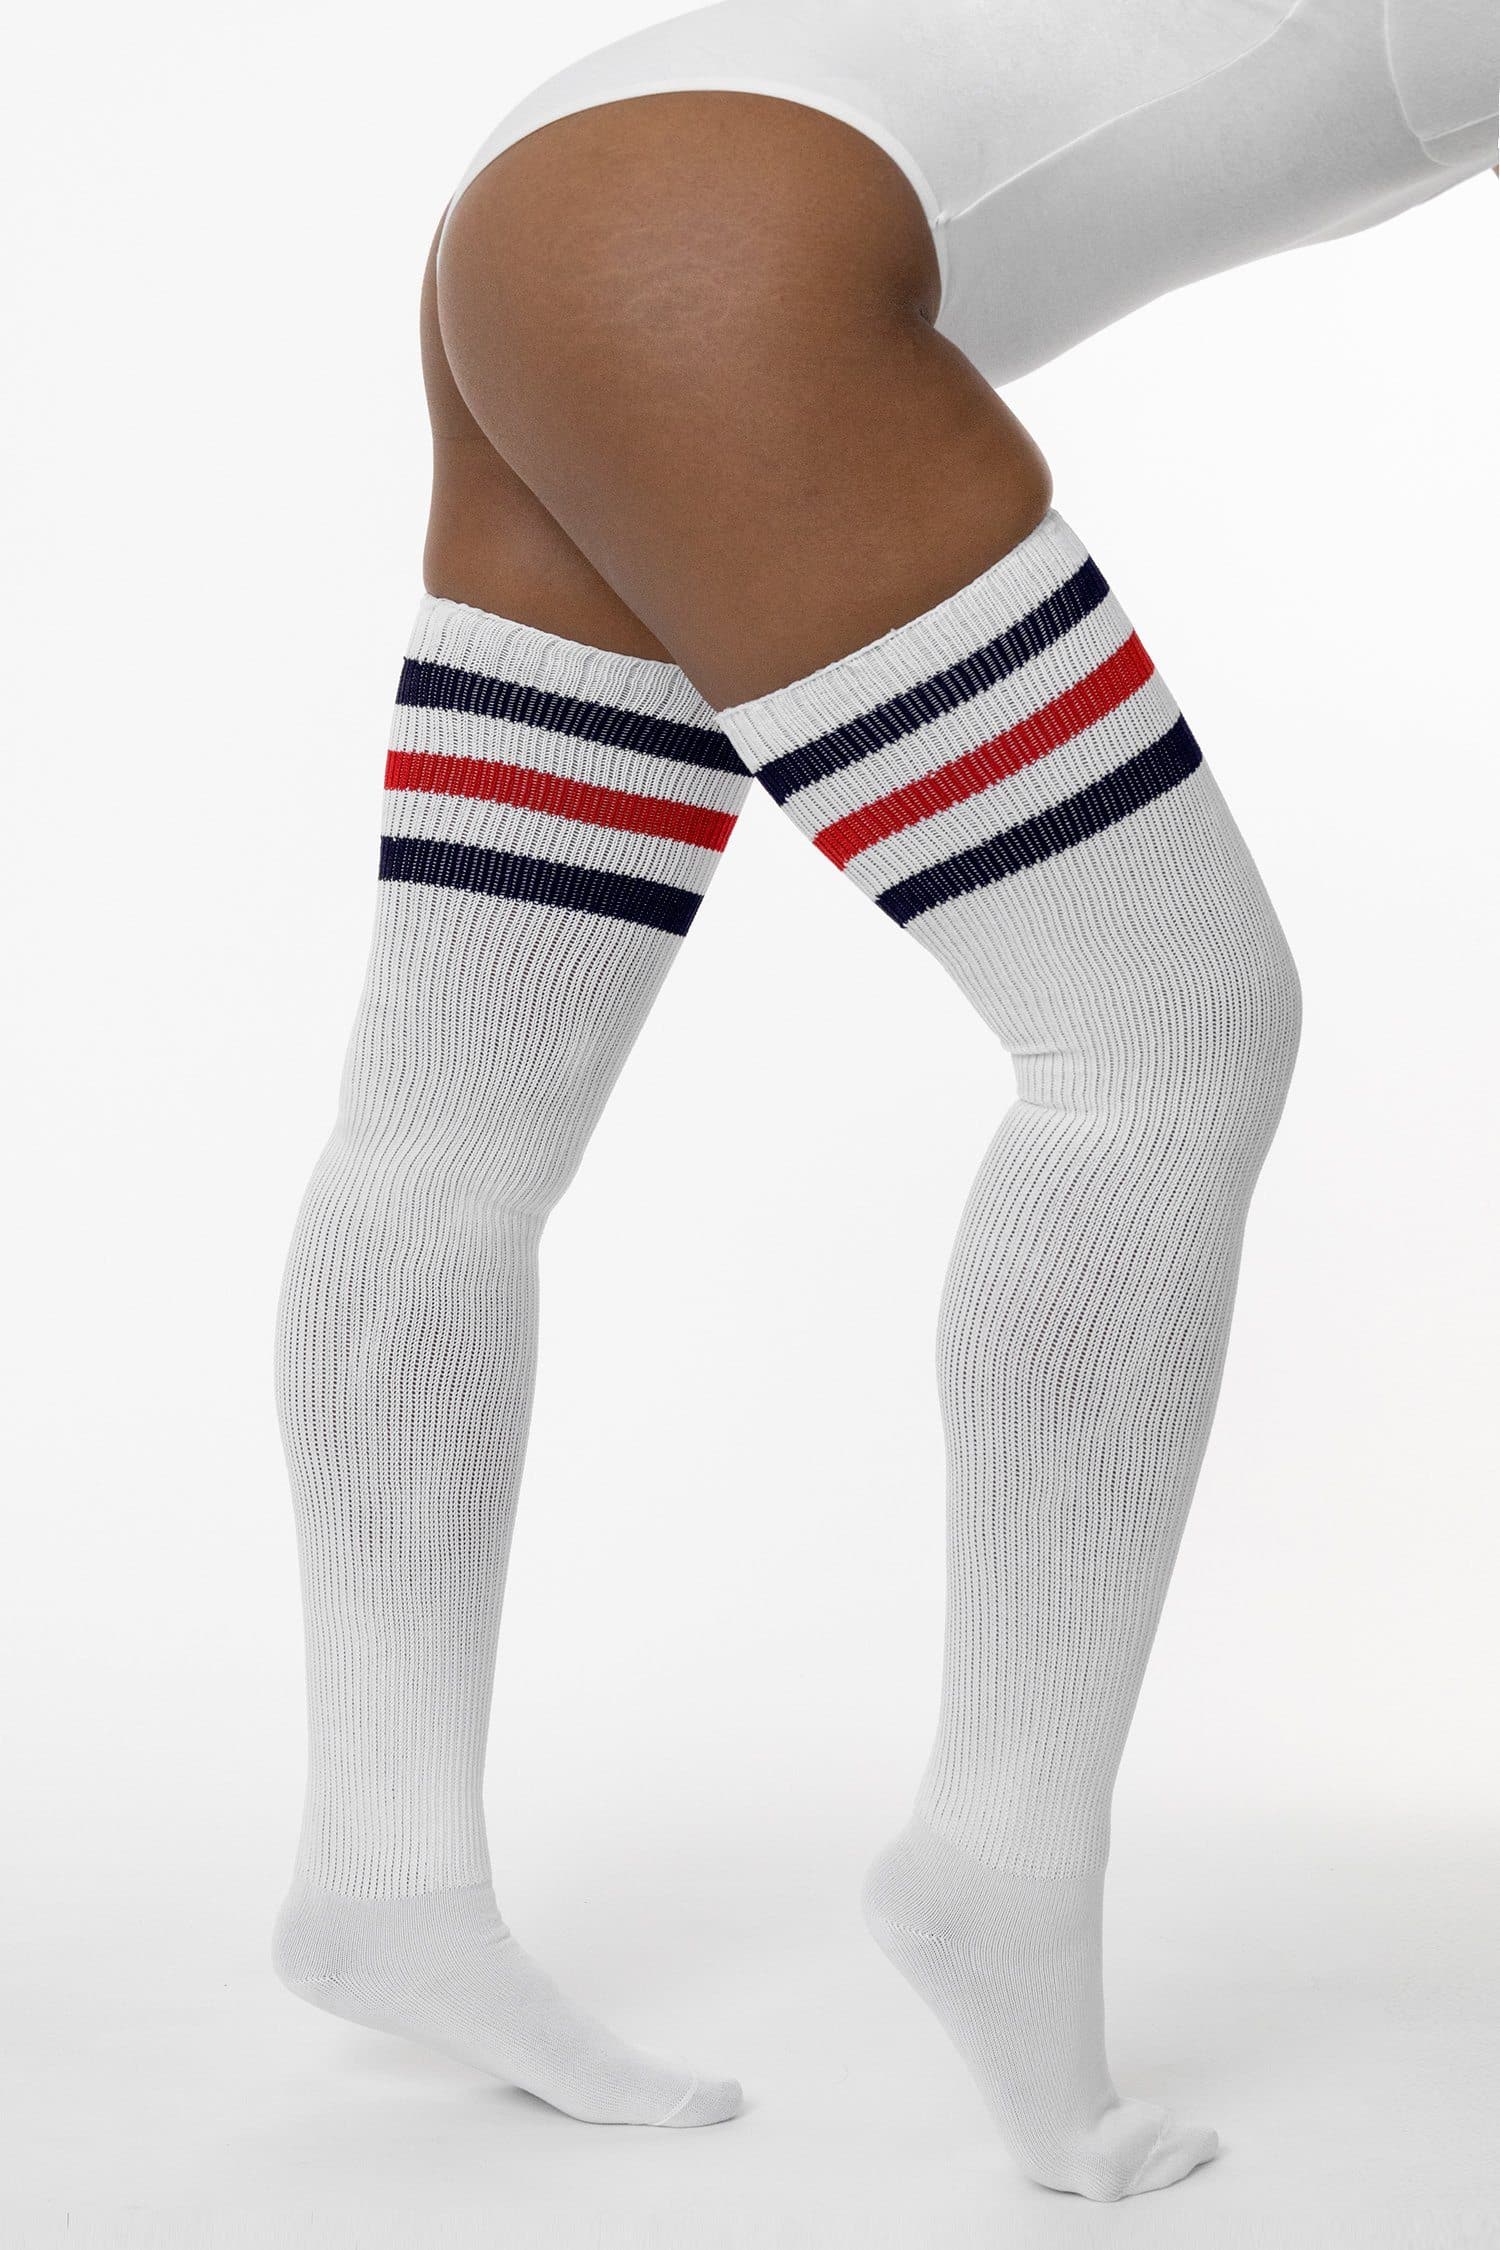 American Thigh High Socks, Thigh High Socks